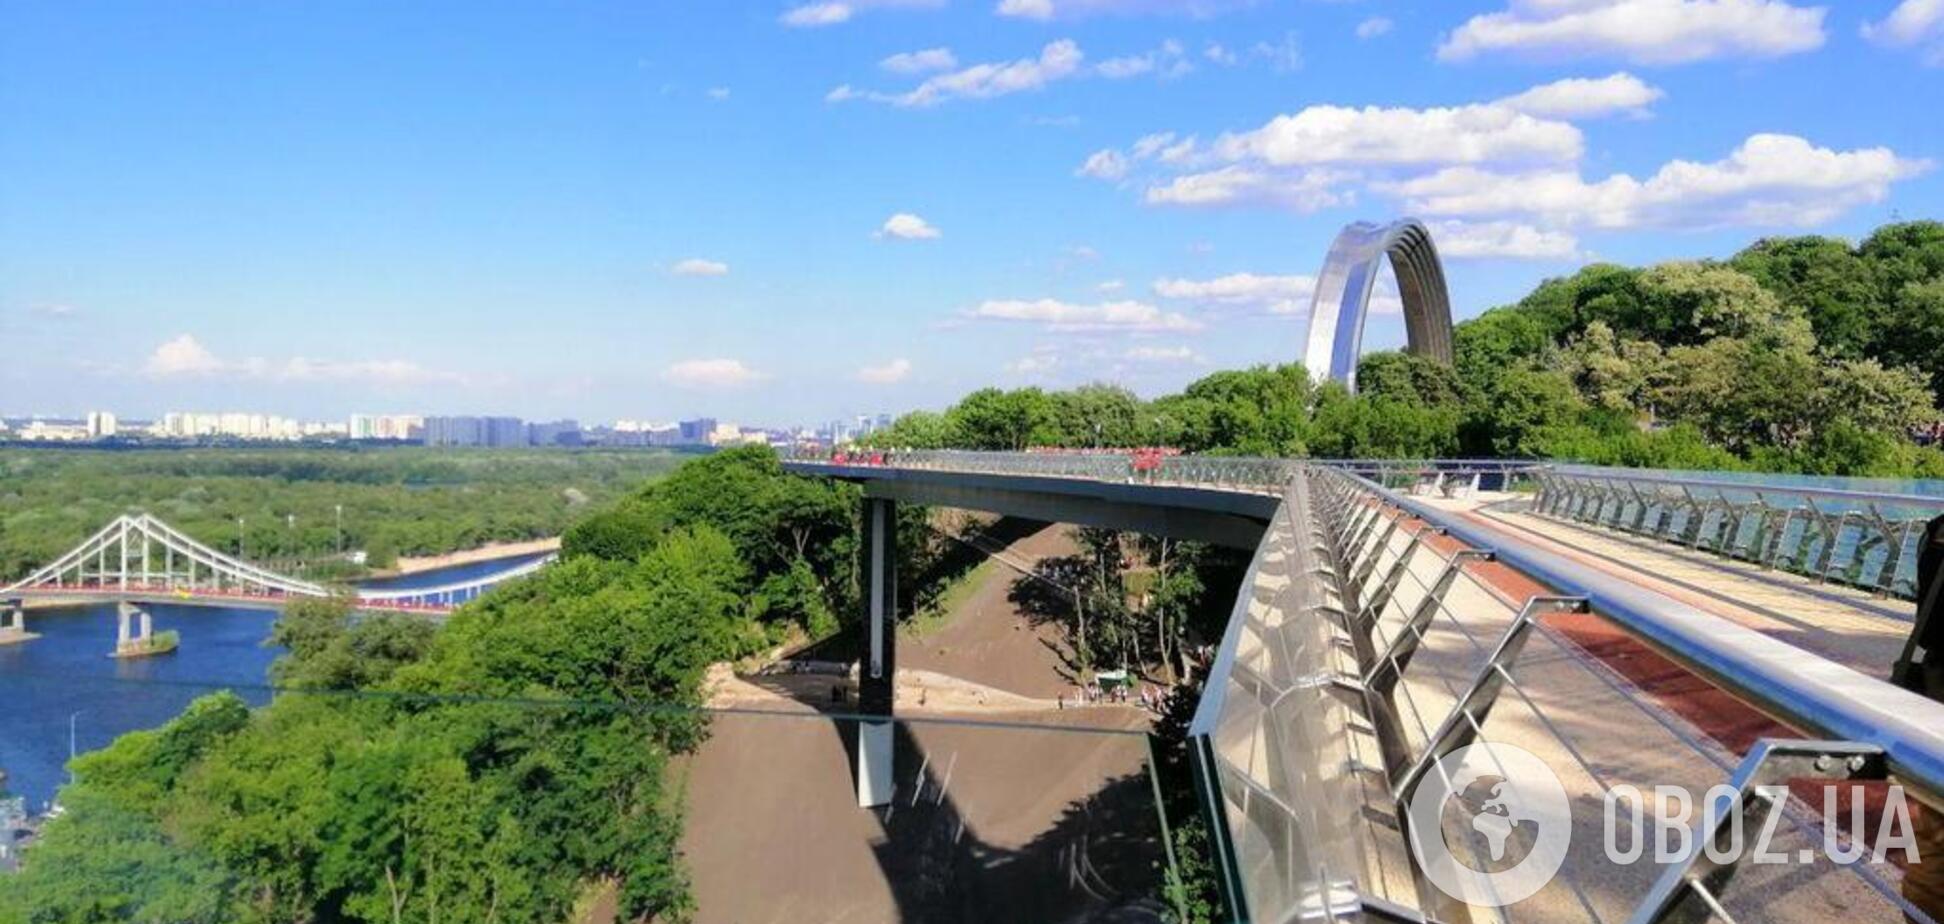 'Могли стрелять!' Кличко объяснил погром нового чудо-моста над Владимирским спуском